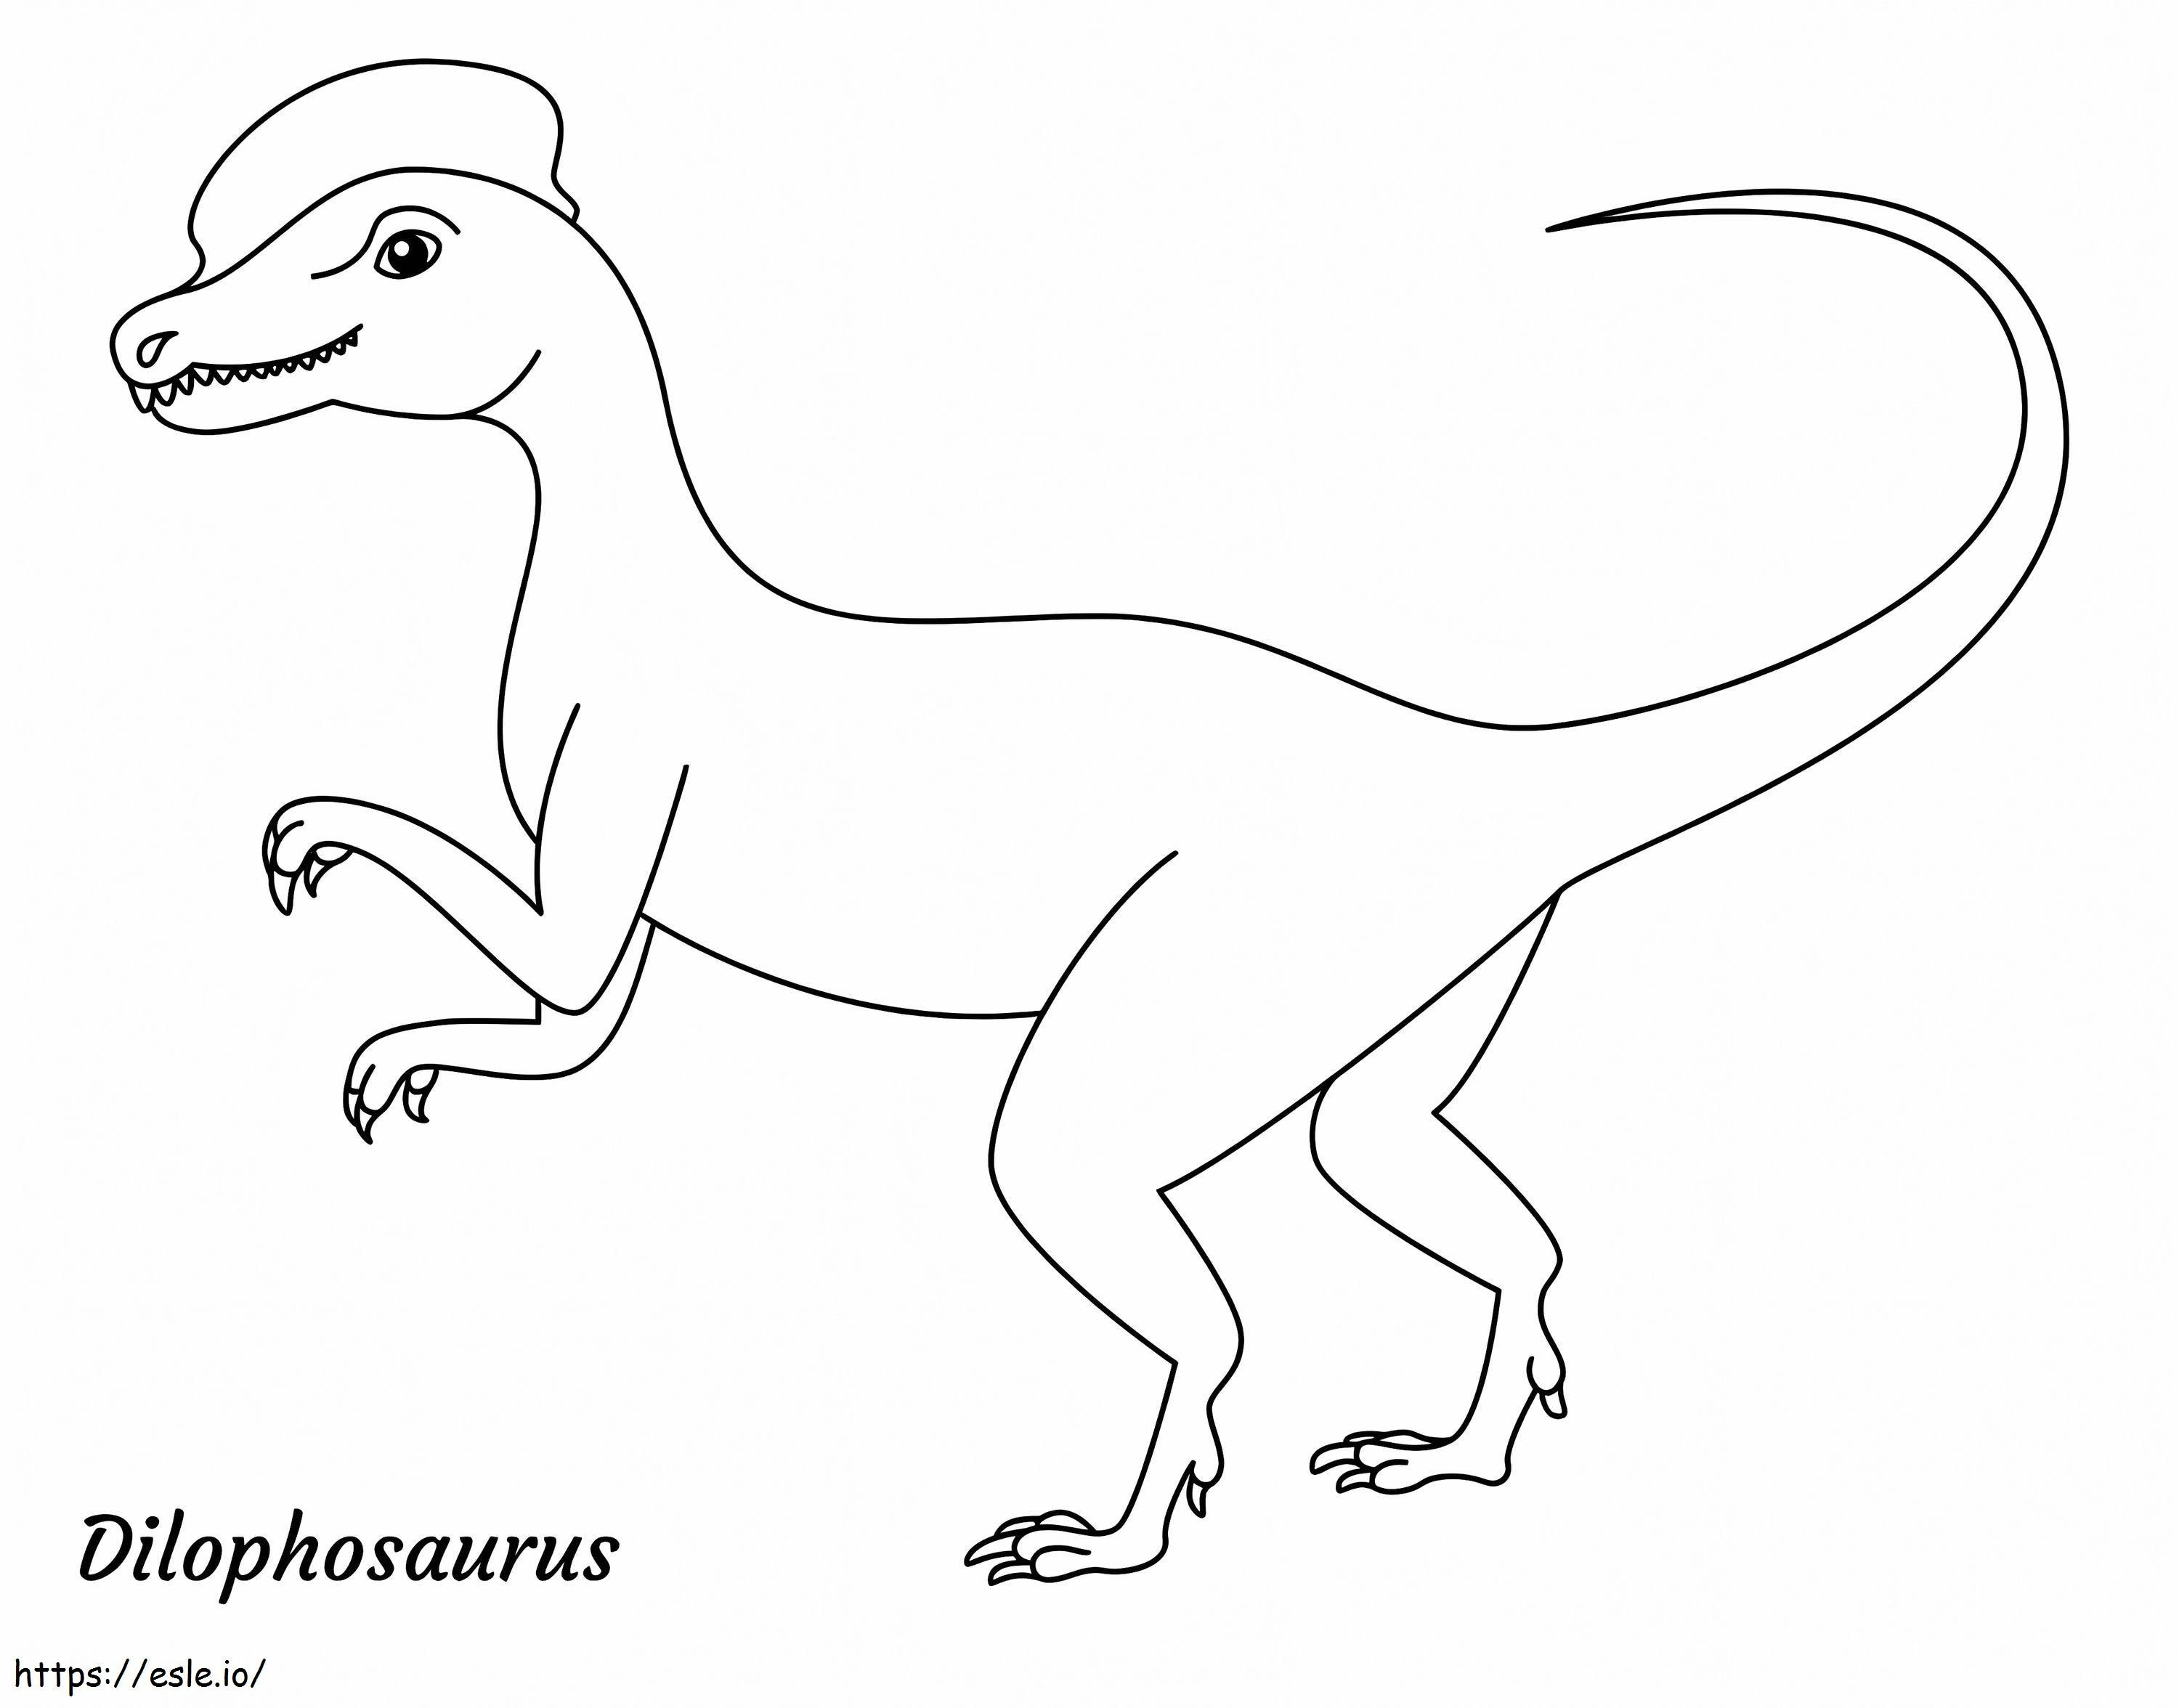 Dilophosaurus 4 coloring page